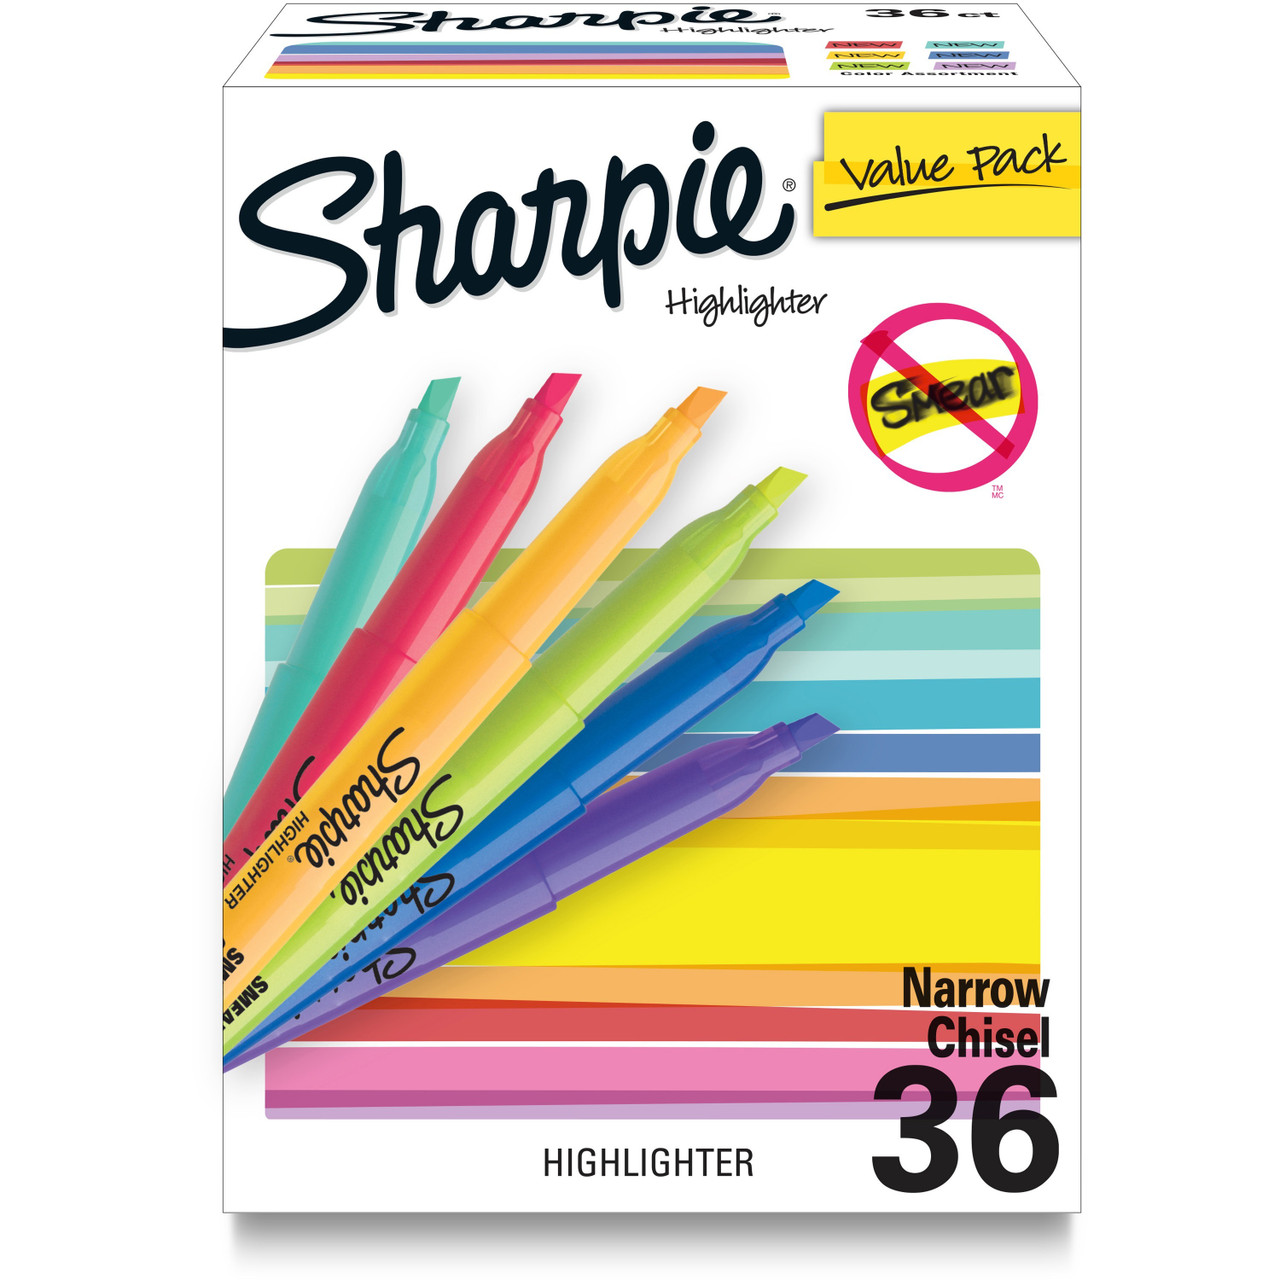 sharpie highlighter